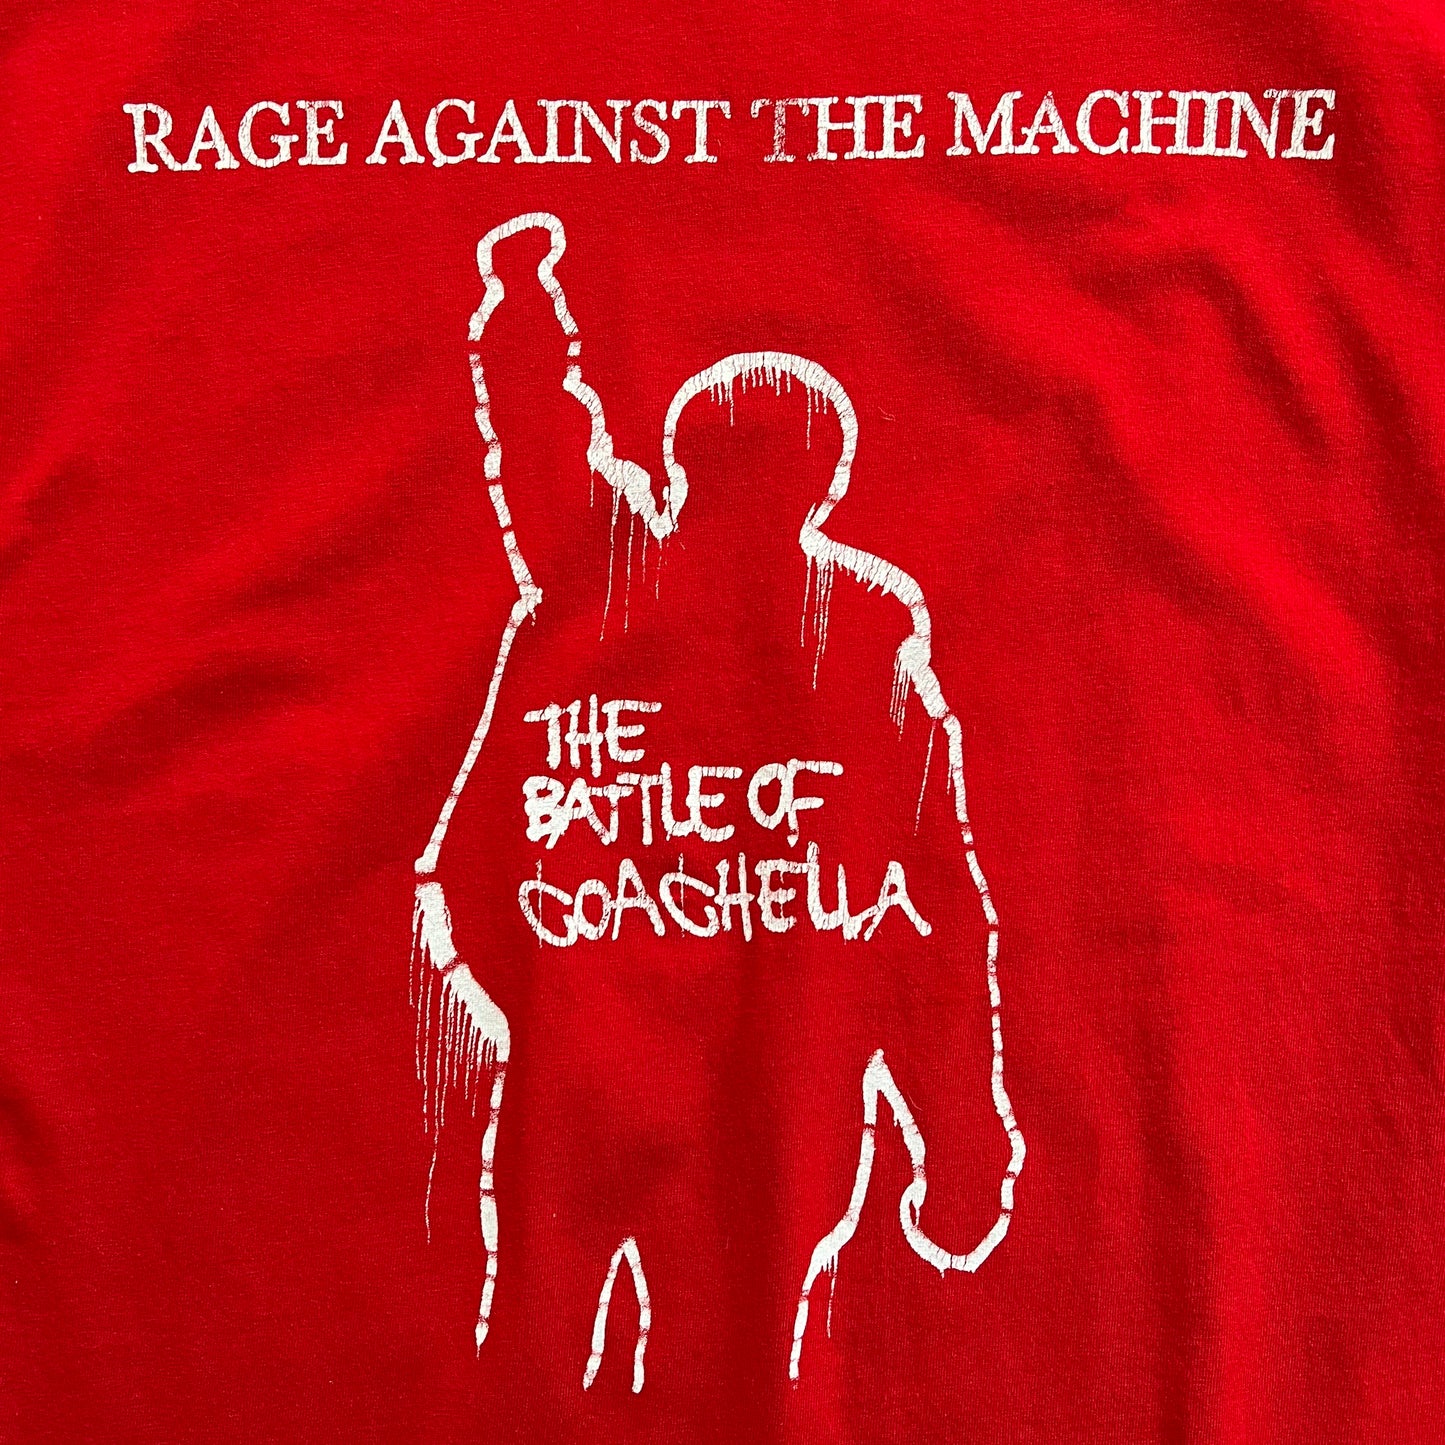 00's RAGE AGAINST THE MACHINE "THE BATTLE OF COACHELLA" TOUR T-SHIRT